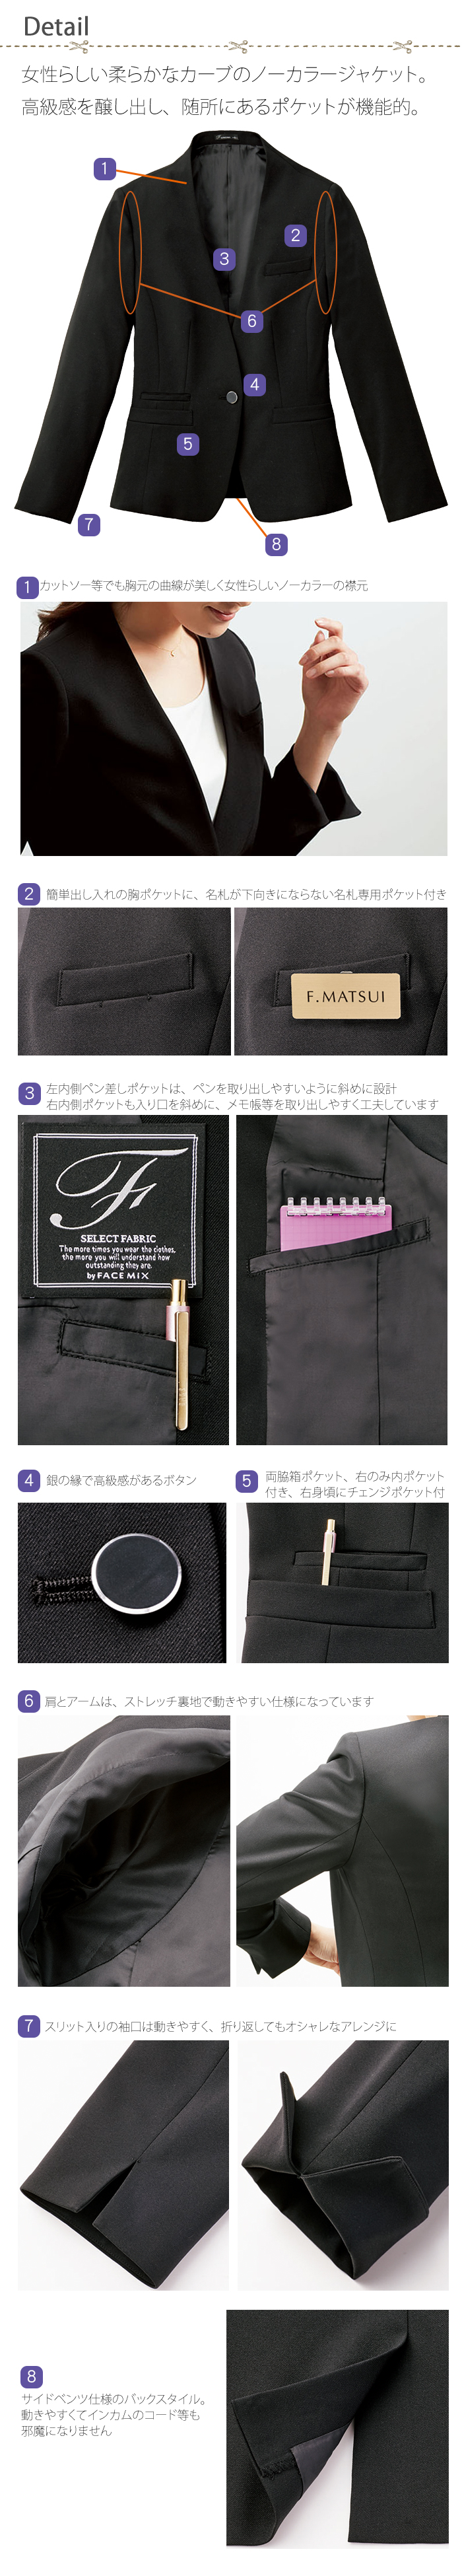 FJ0317Lストレッチ素材のノーカラージャケット 商品詳細画像